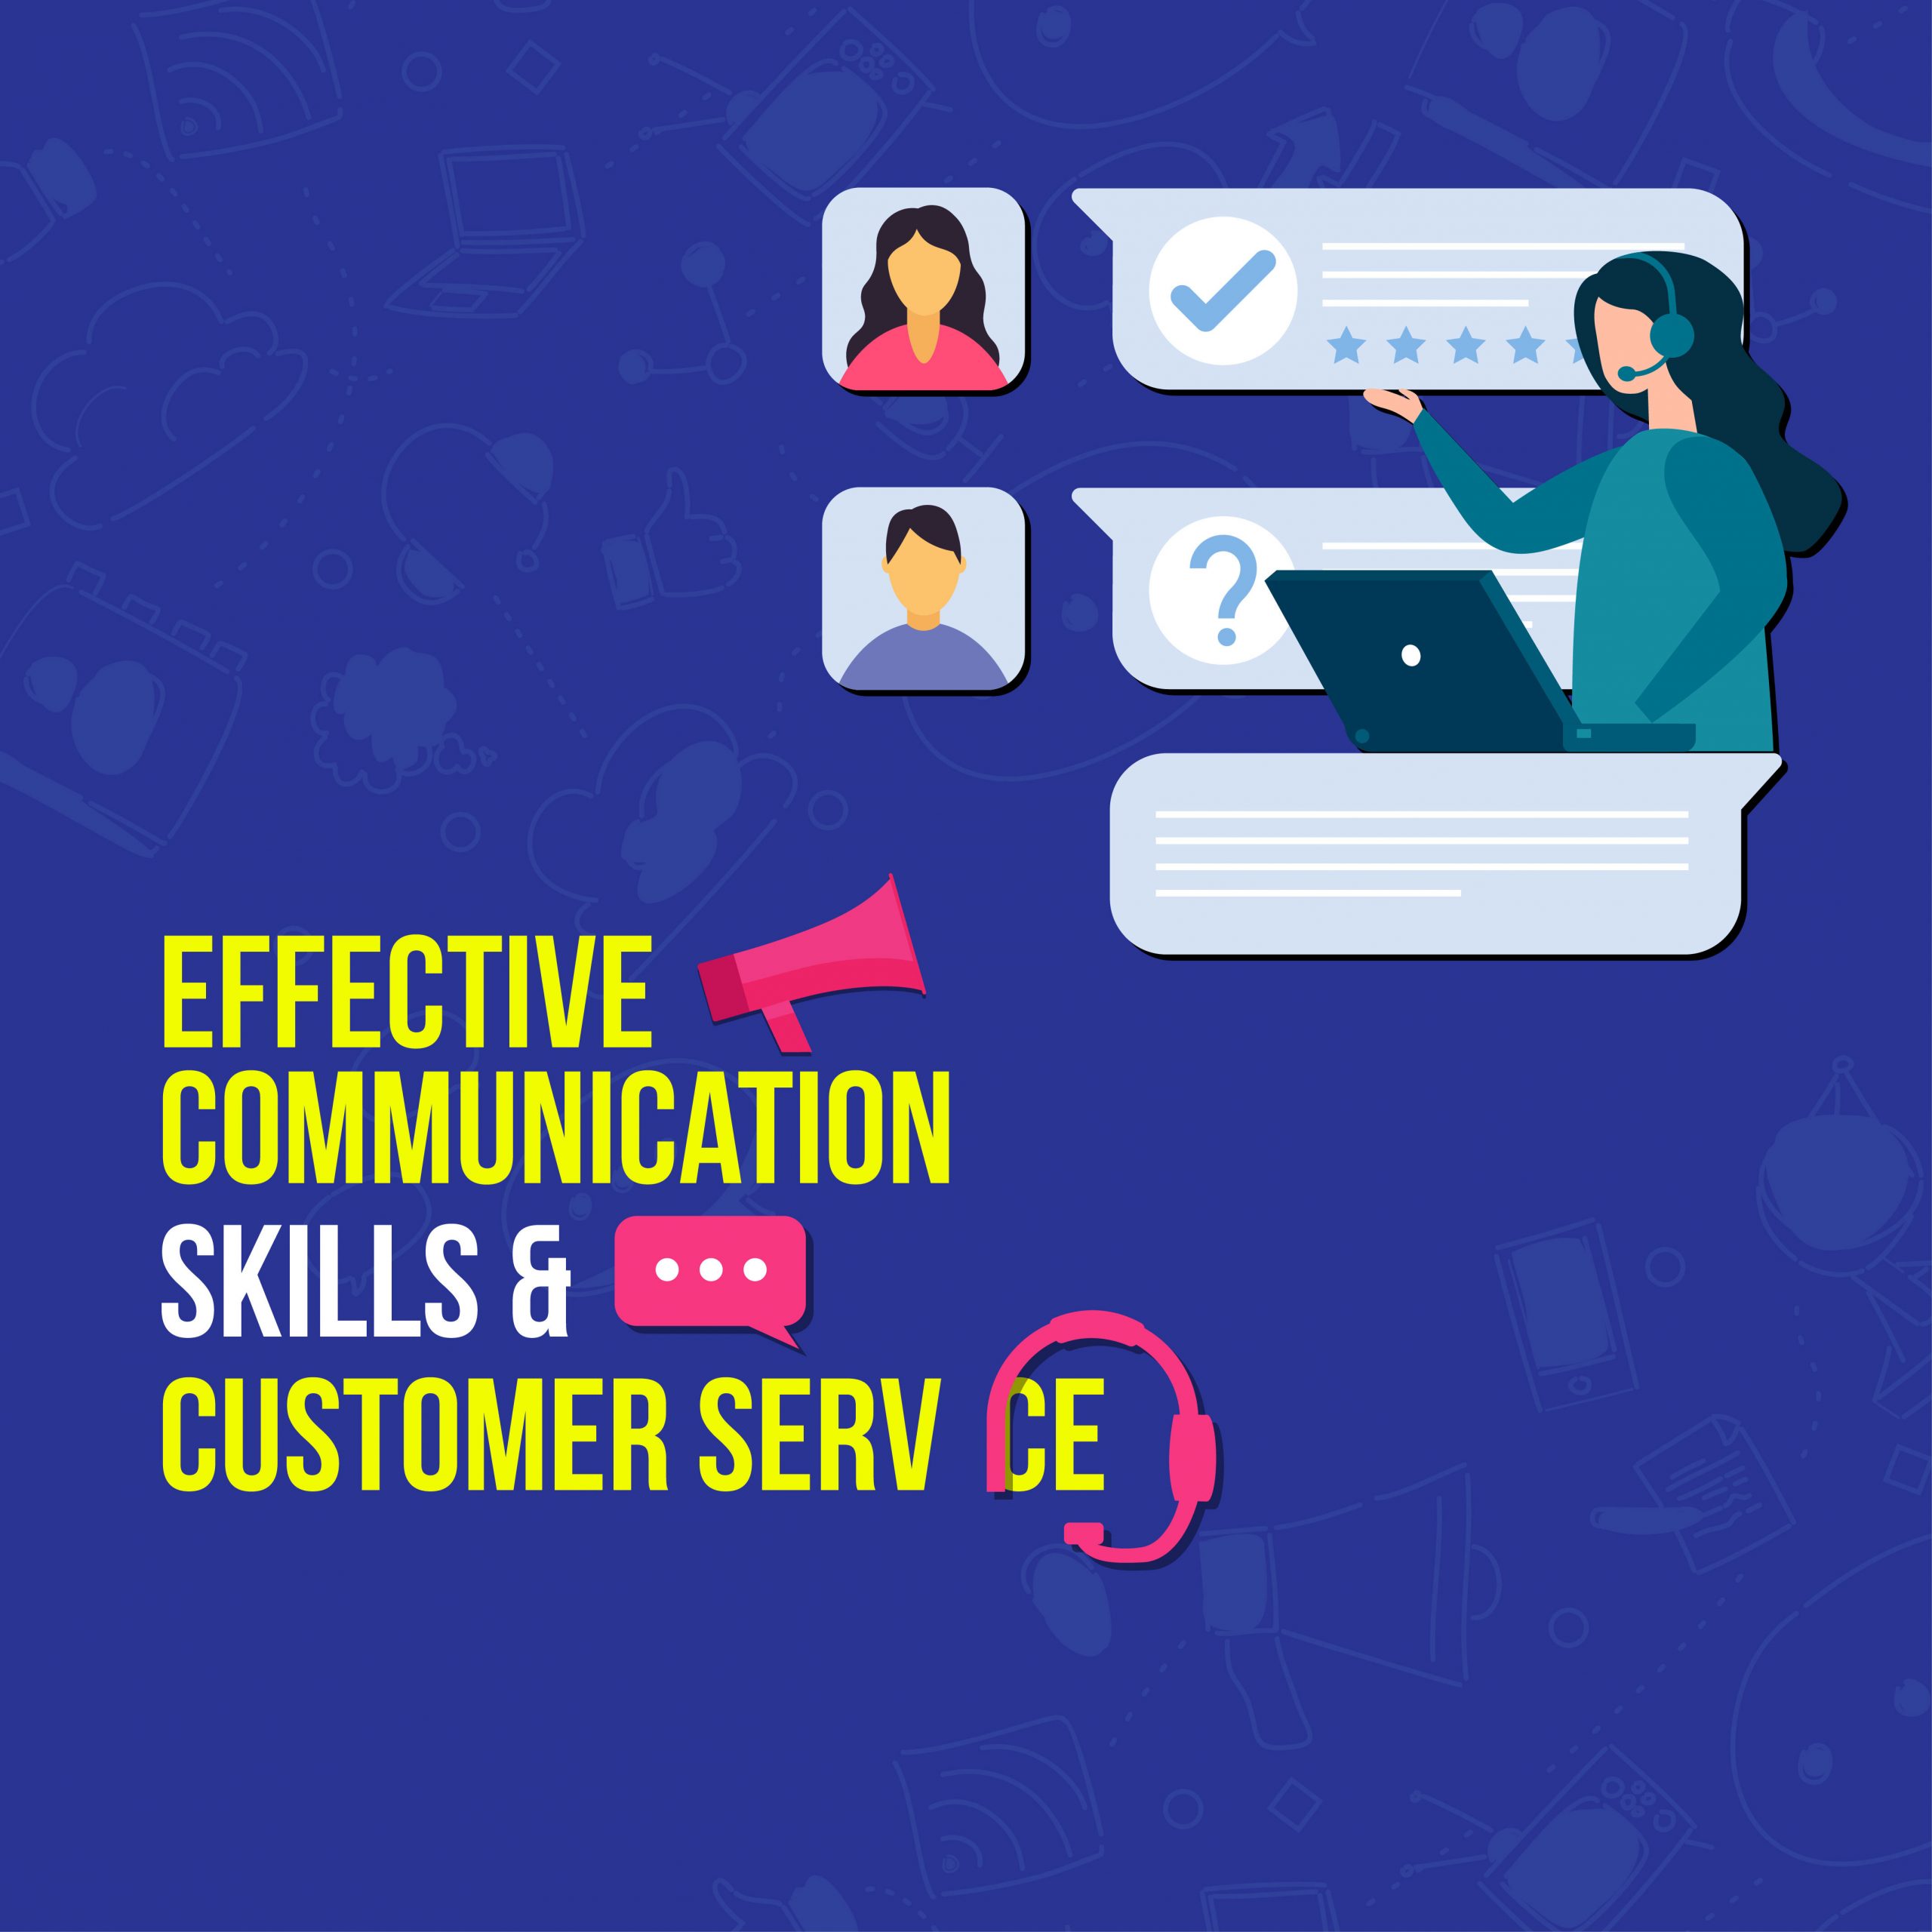 Effective Communication Skills & Customer Service for Business